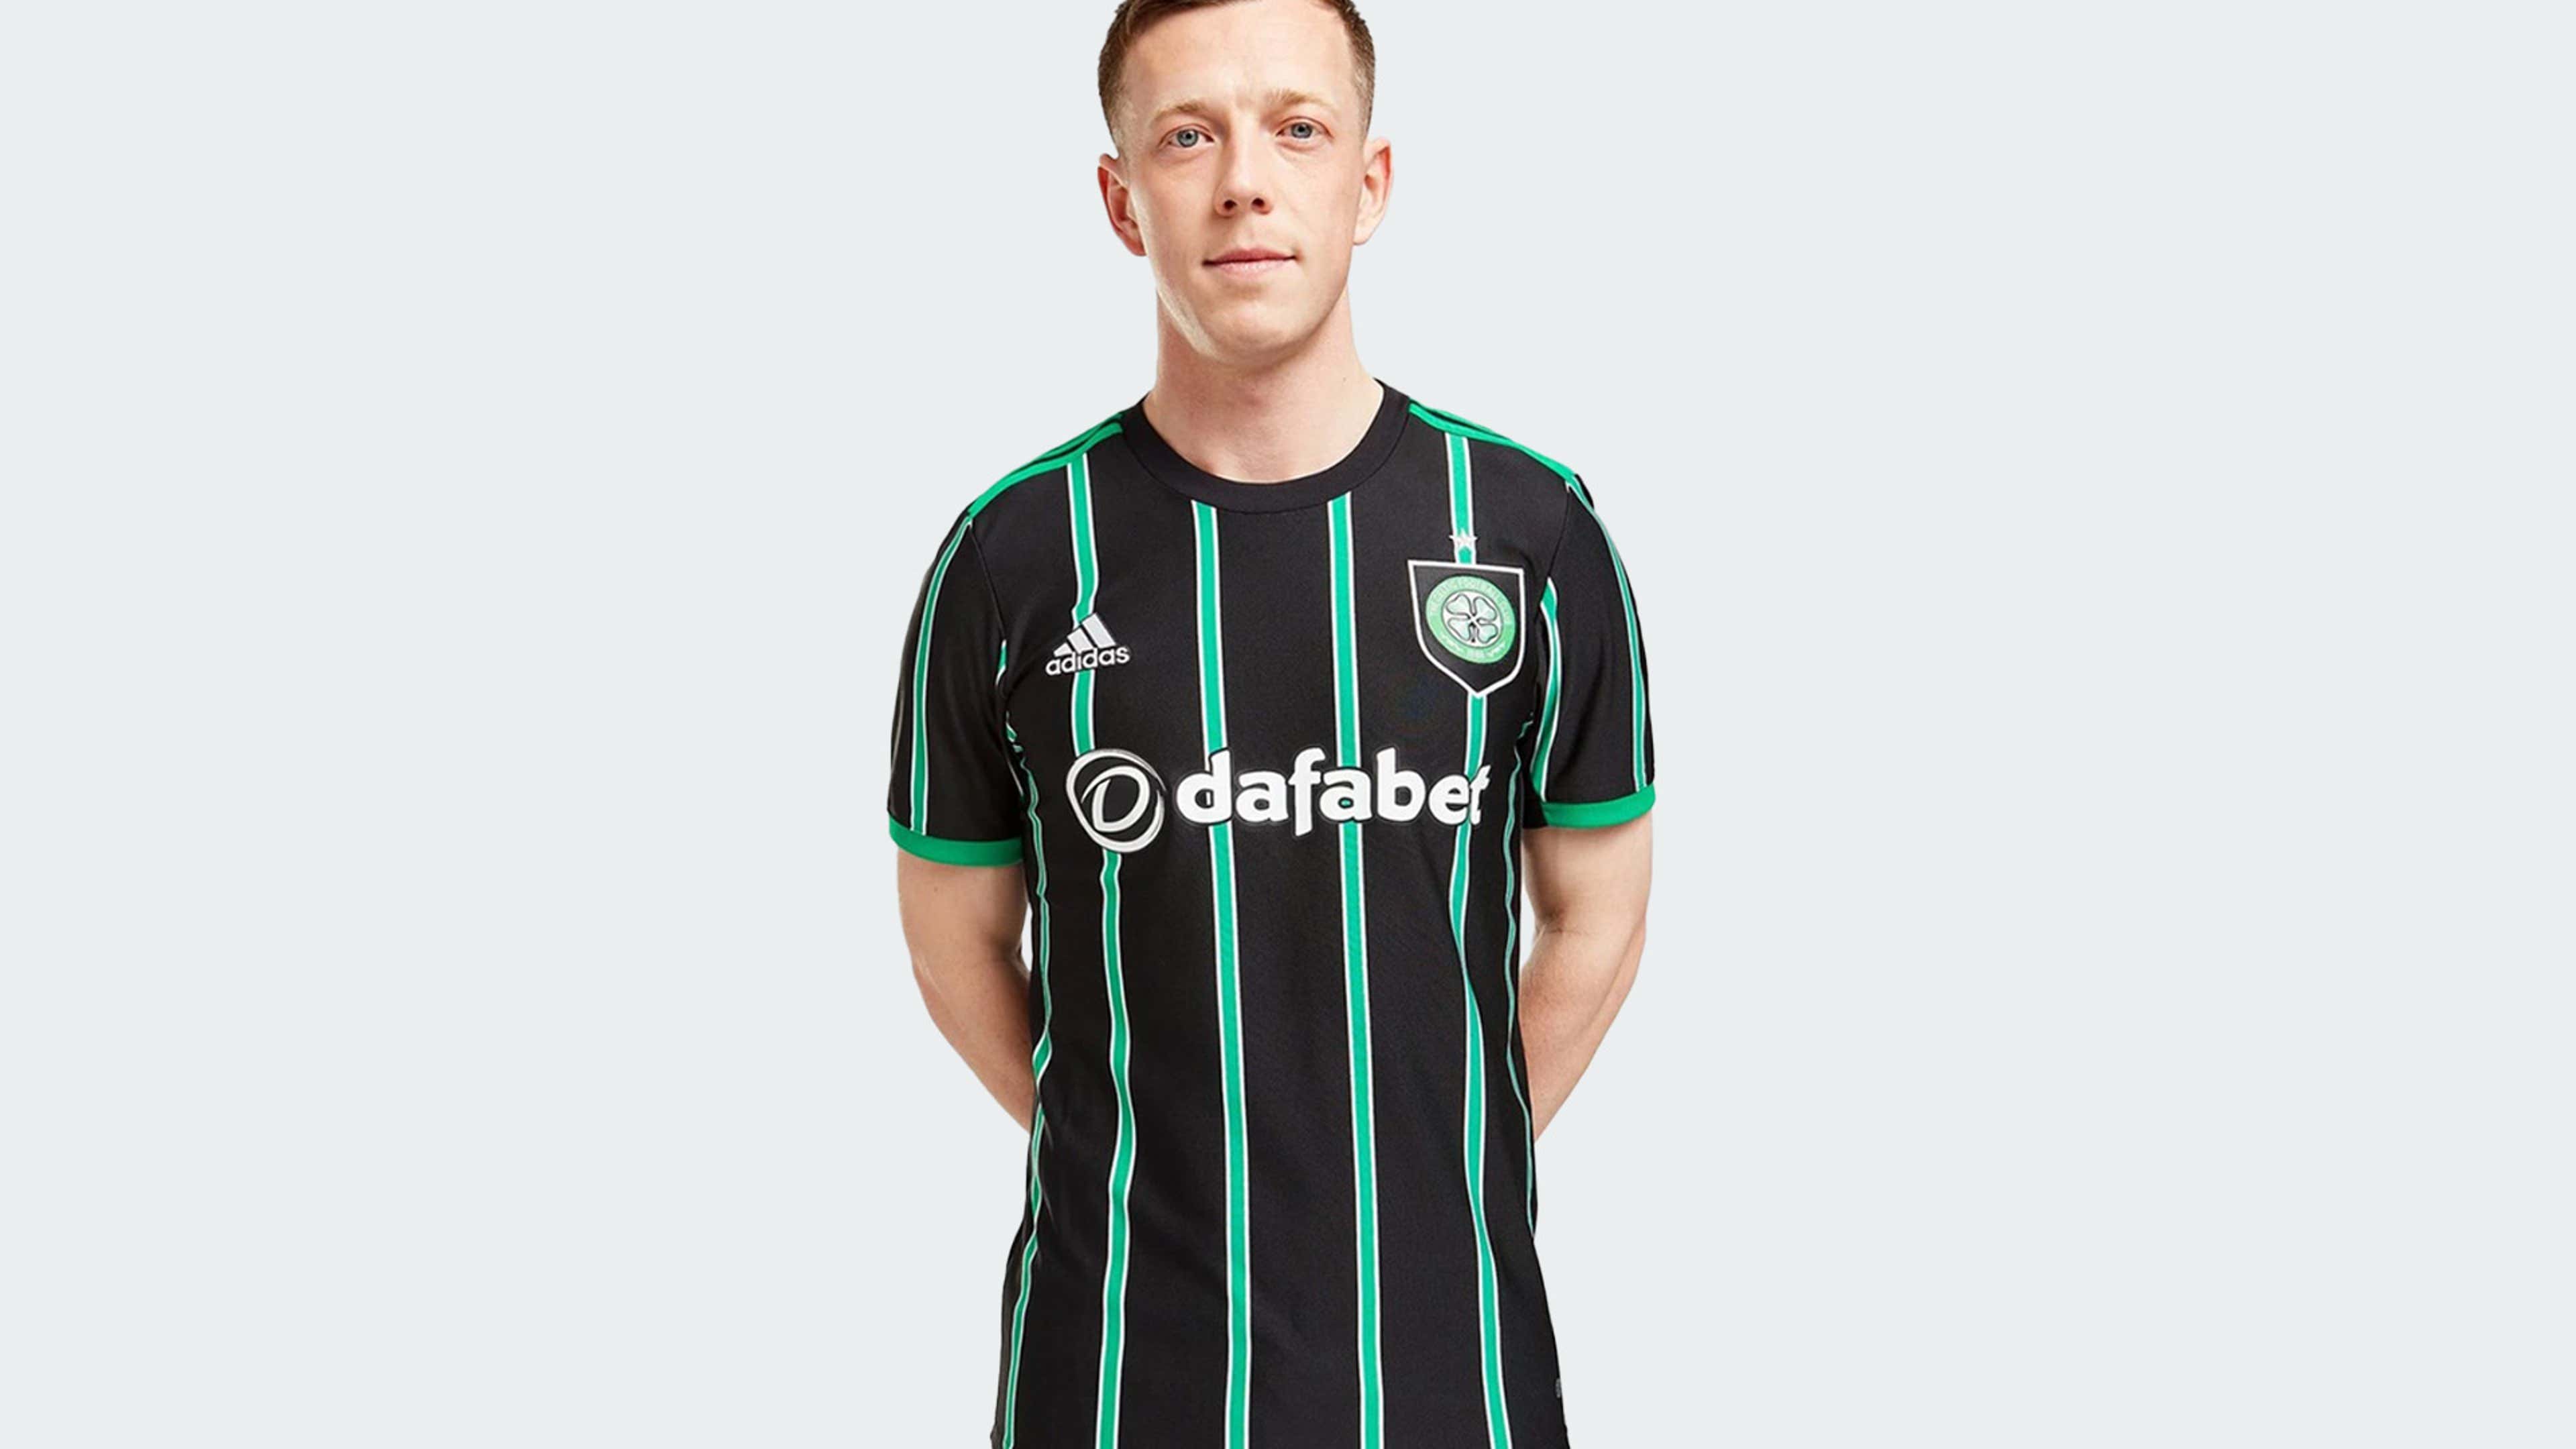 Celtic 2020-21 Adidas Away Kit - Football Shirt Culture - Latest